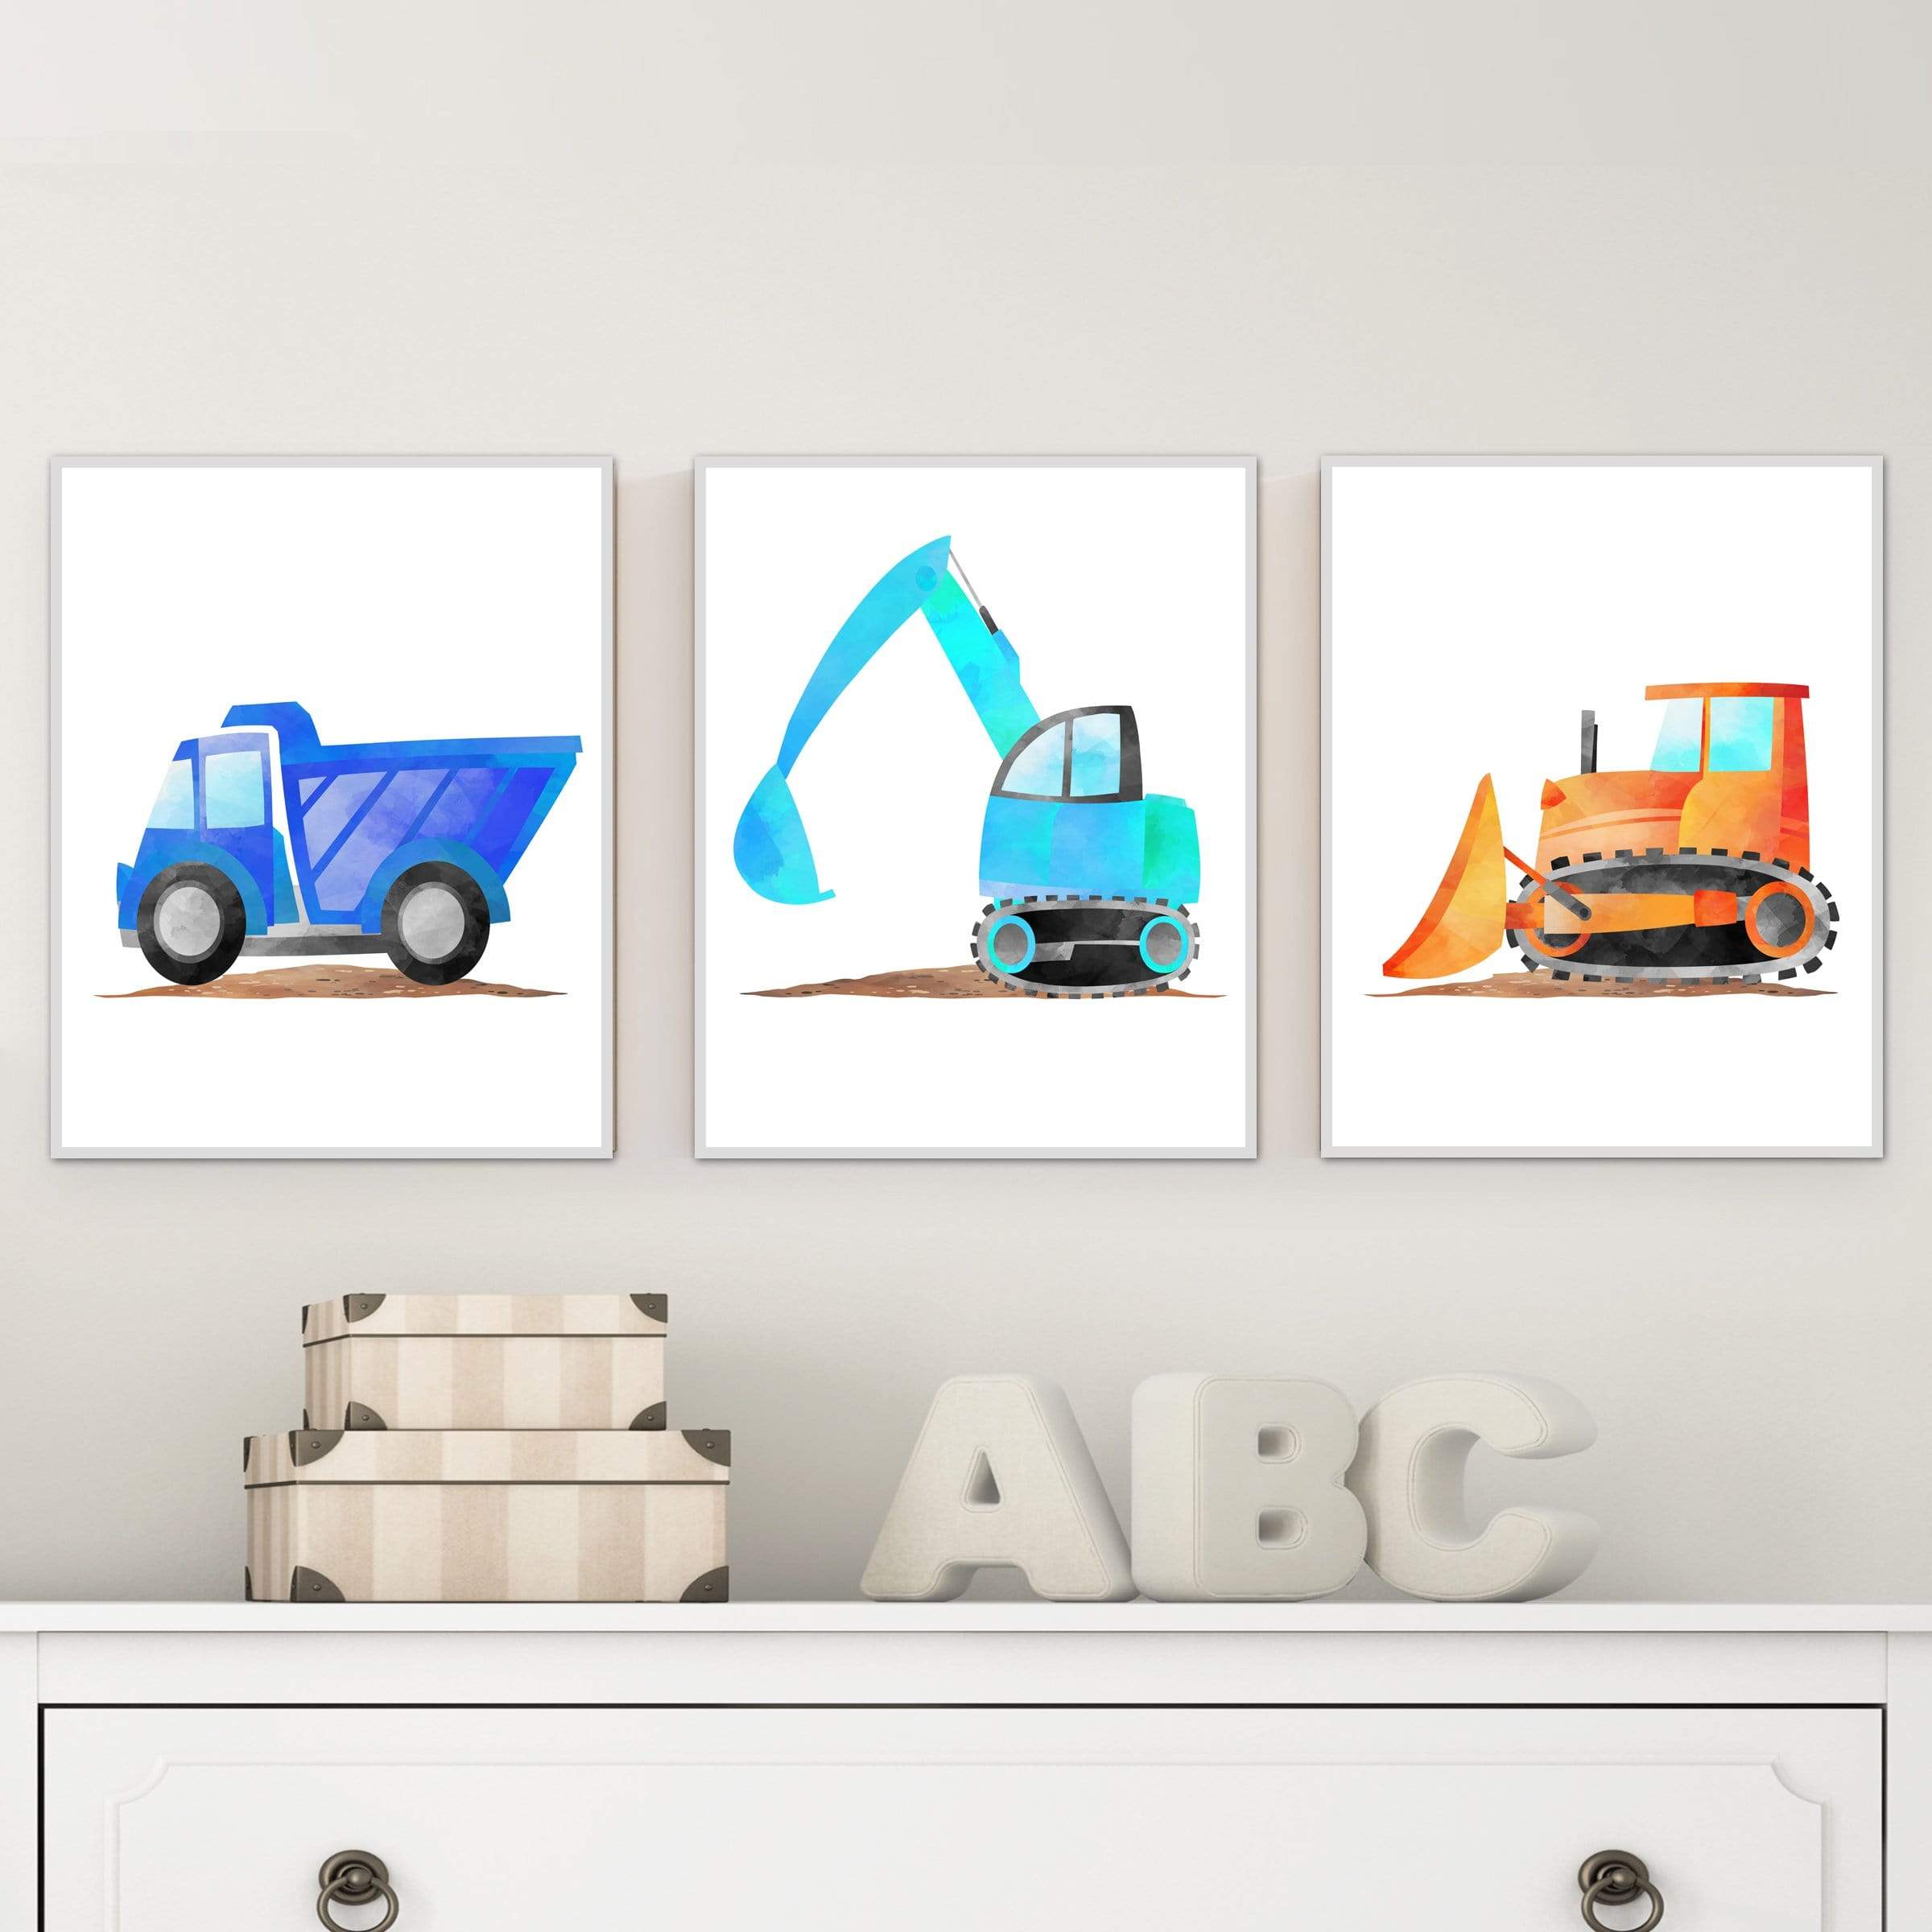 Truck prints - Construction nursery decor - Truck printables - Truck prints boys room - Baby boy nursery - Truck poster set of 3 prints nursery art print baby nursery bedroom decor